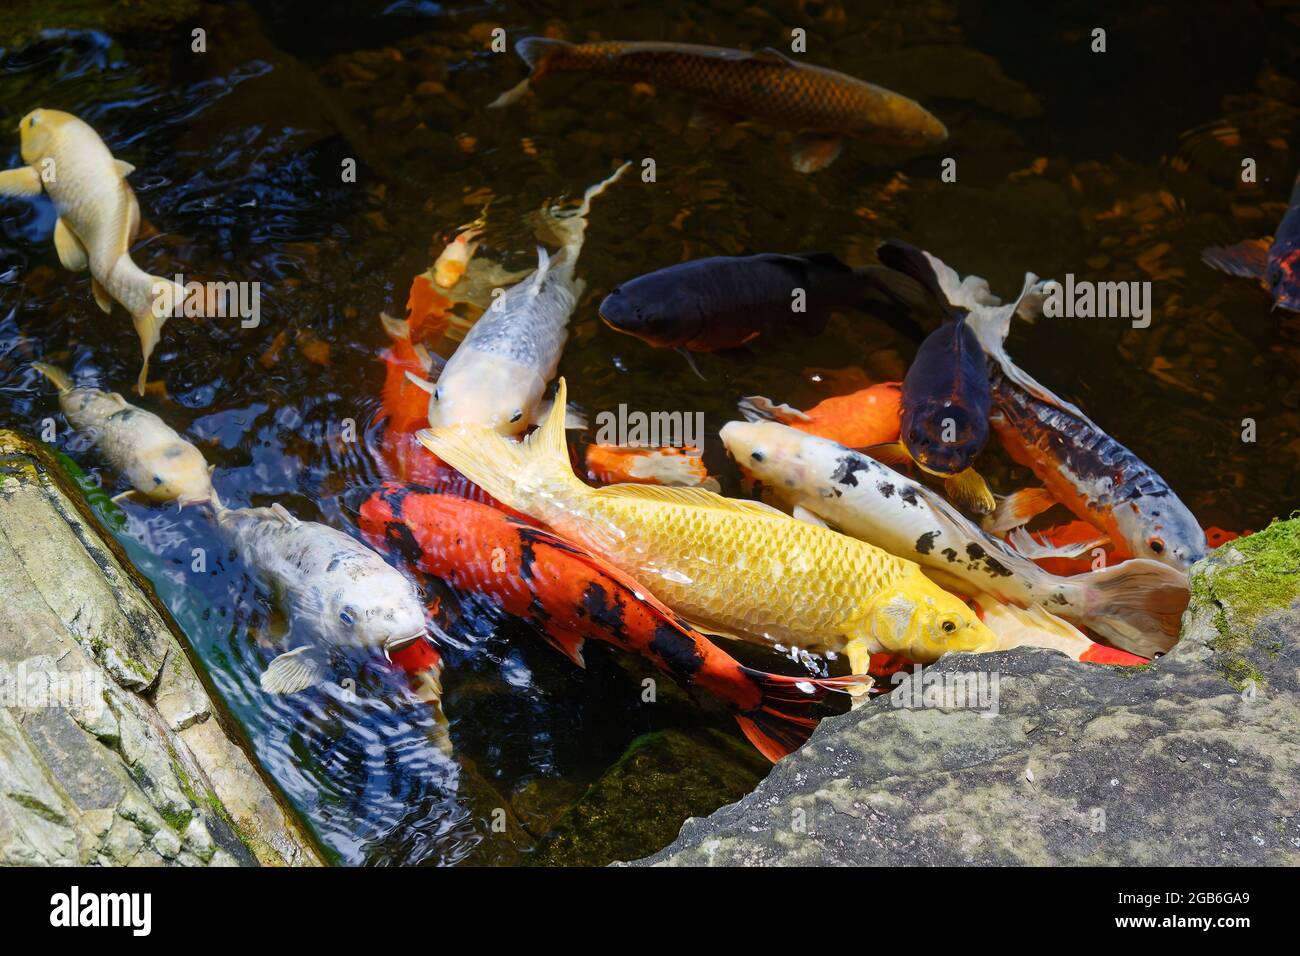 colorful fish, pond, garden, water, nature, tranquil, peaceful, movement, marine animals, koi, PA, Pennsylvania, USA, PR Stock Photo